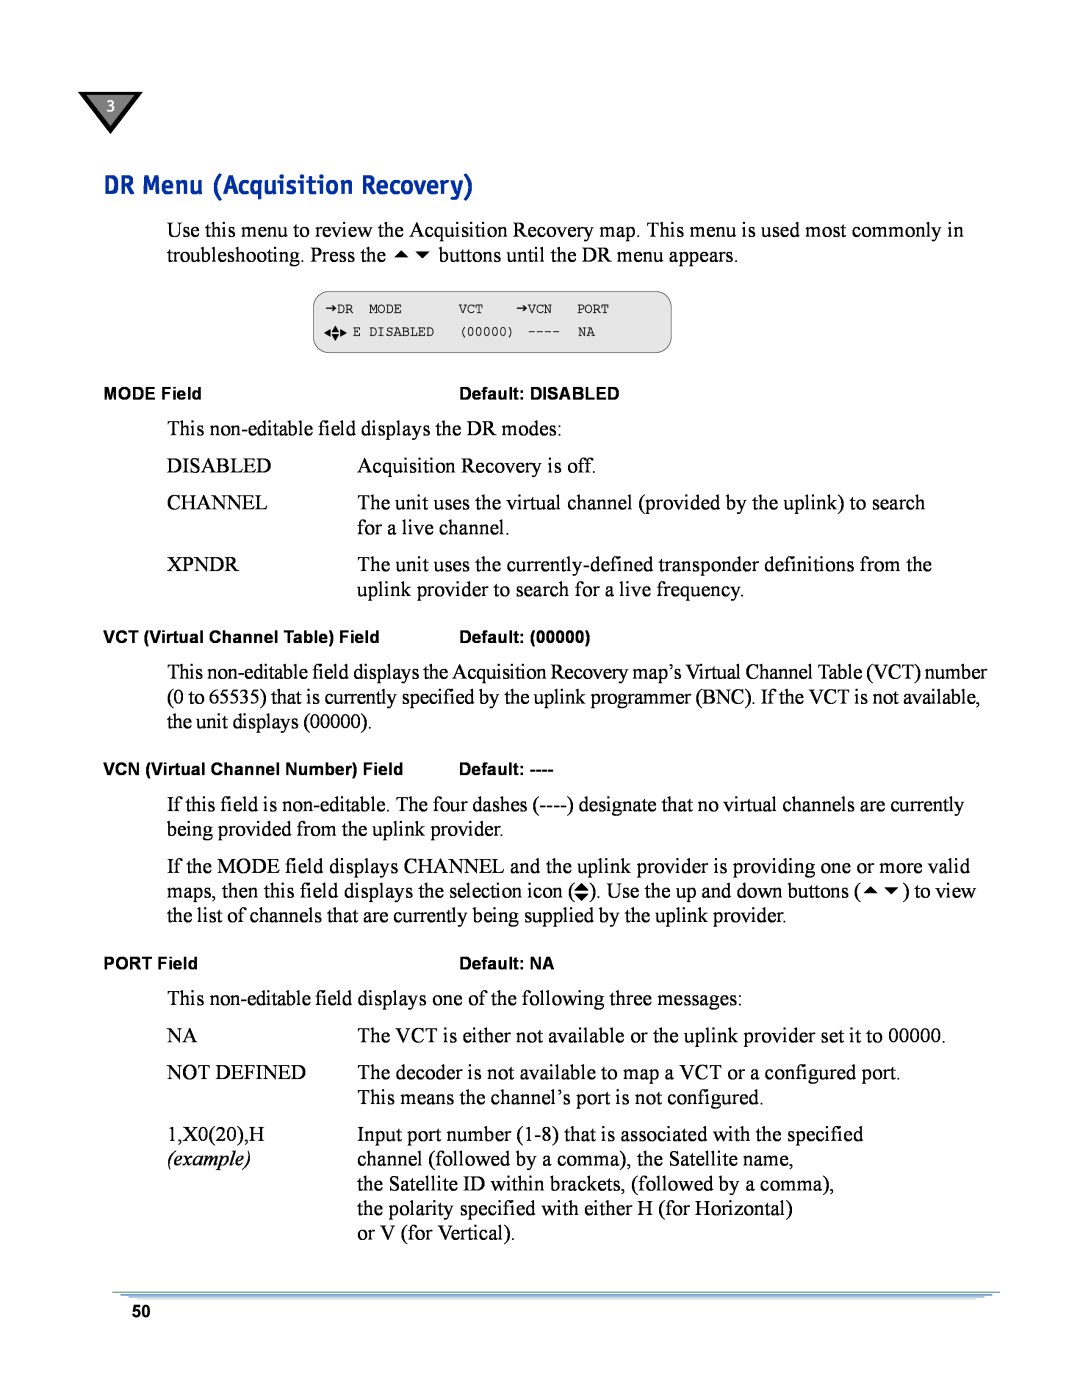 Motorola DSR-6400 manual DR Menu Acquisition Recovery 